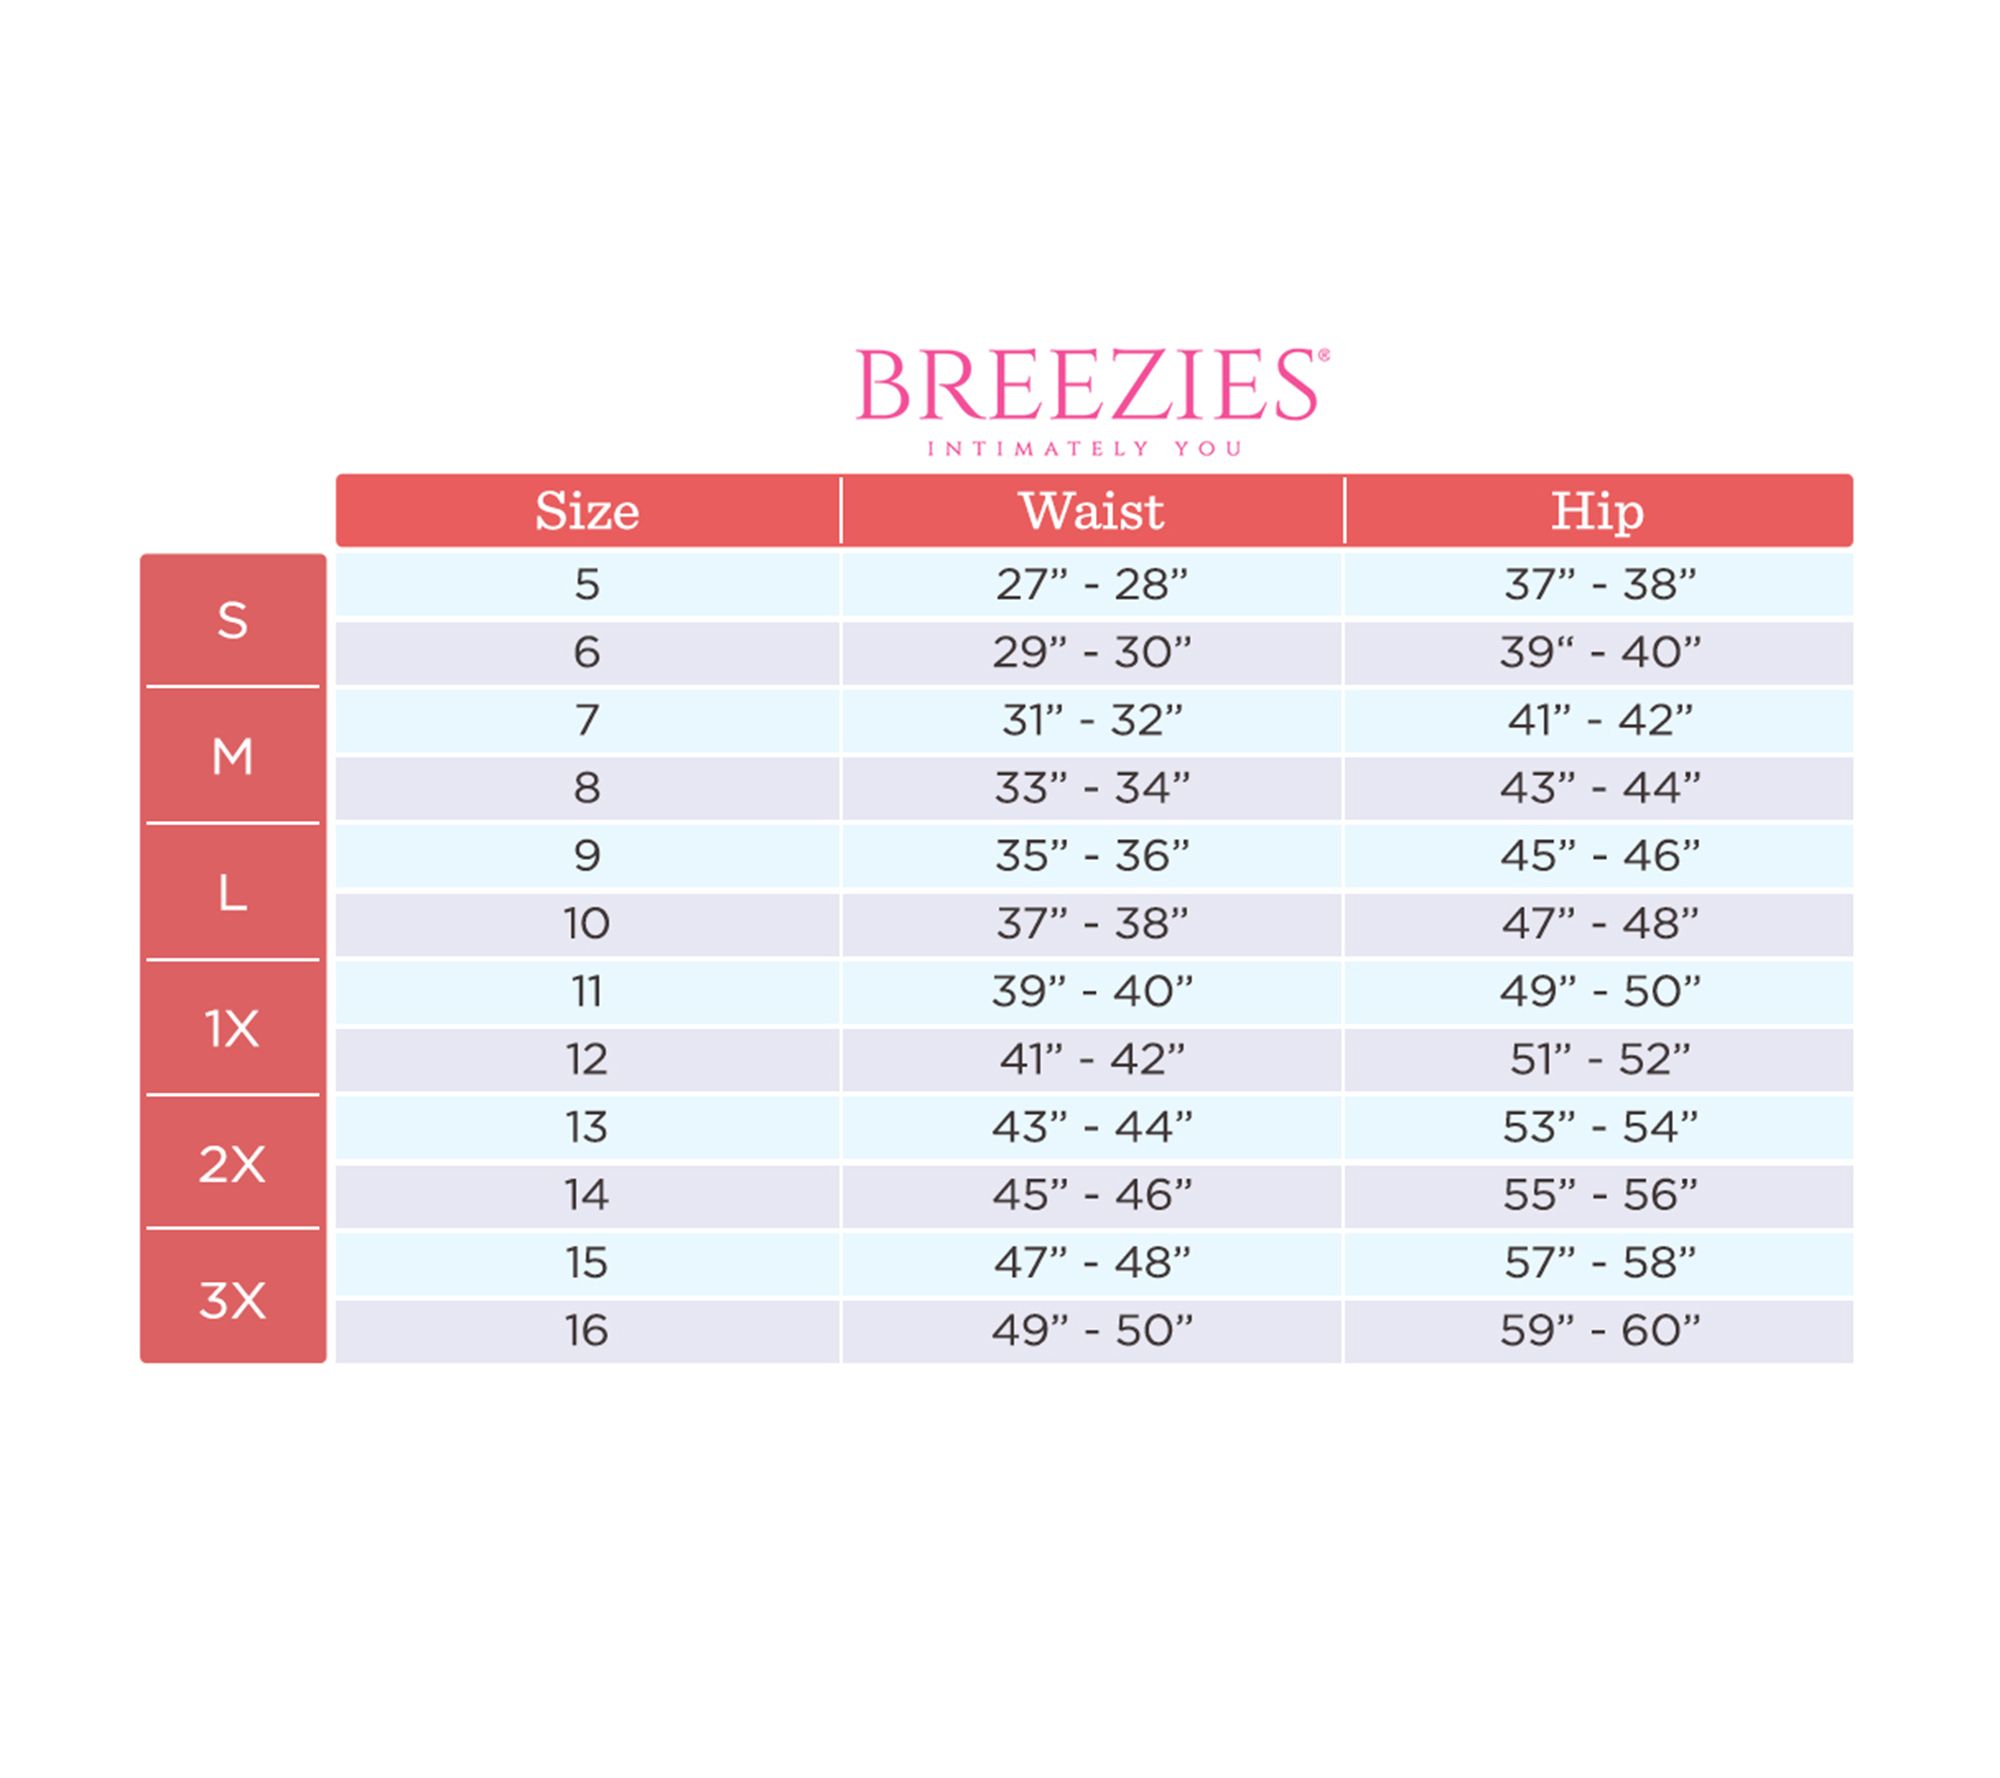 Breezies - Bras 48 - Fashion 